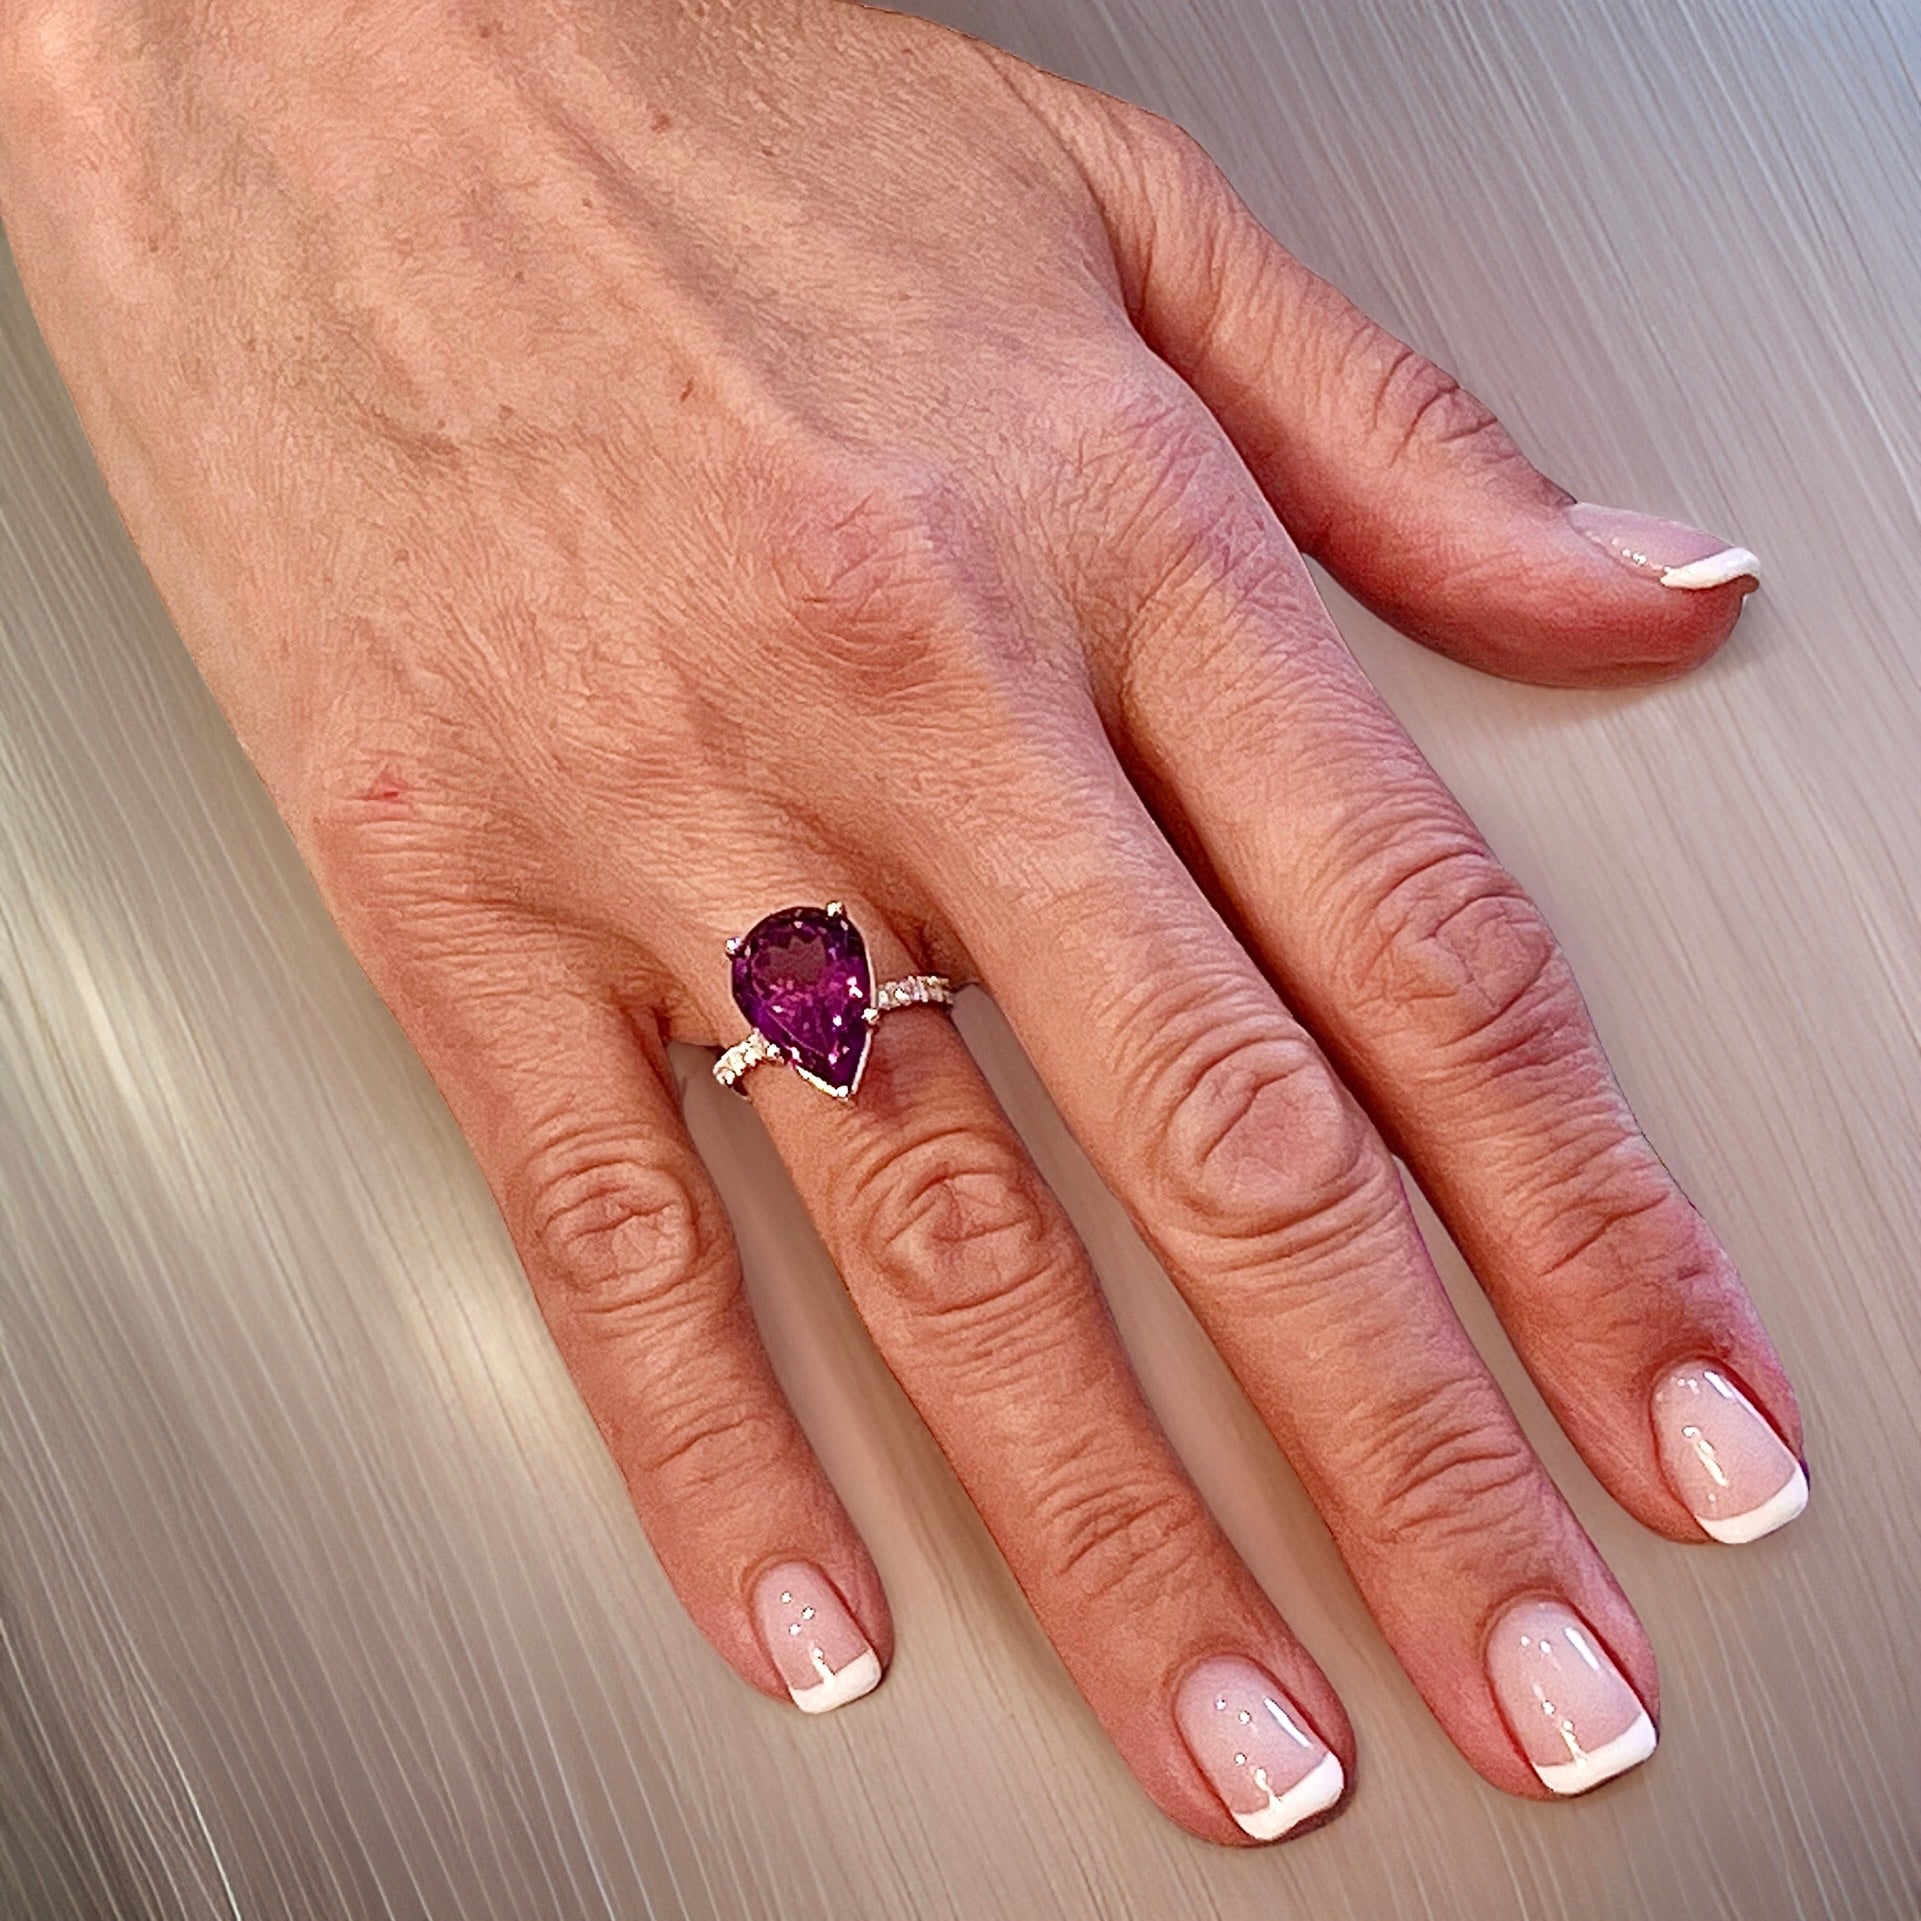 Natural Amethyst Diamond Ring 6.5 14k White Gold 7.67 TCW Certified $3,950 311006